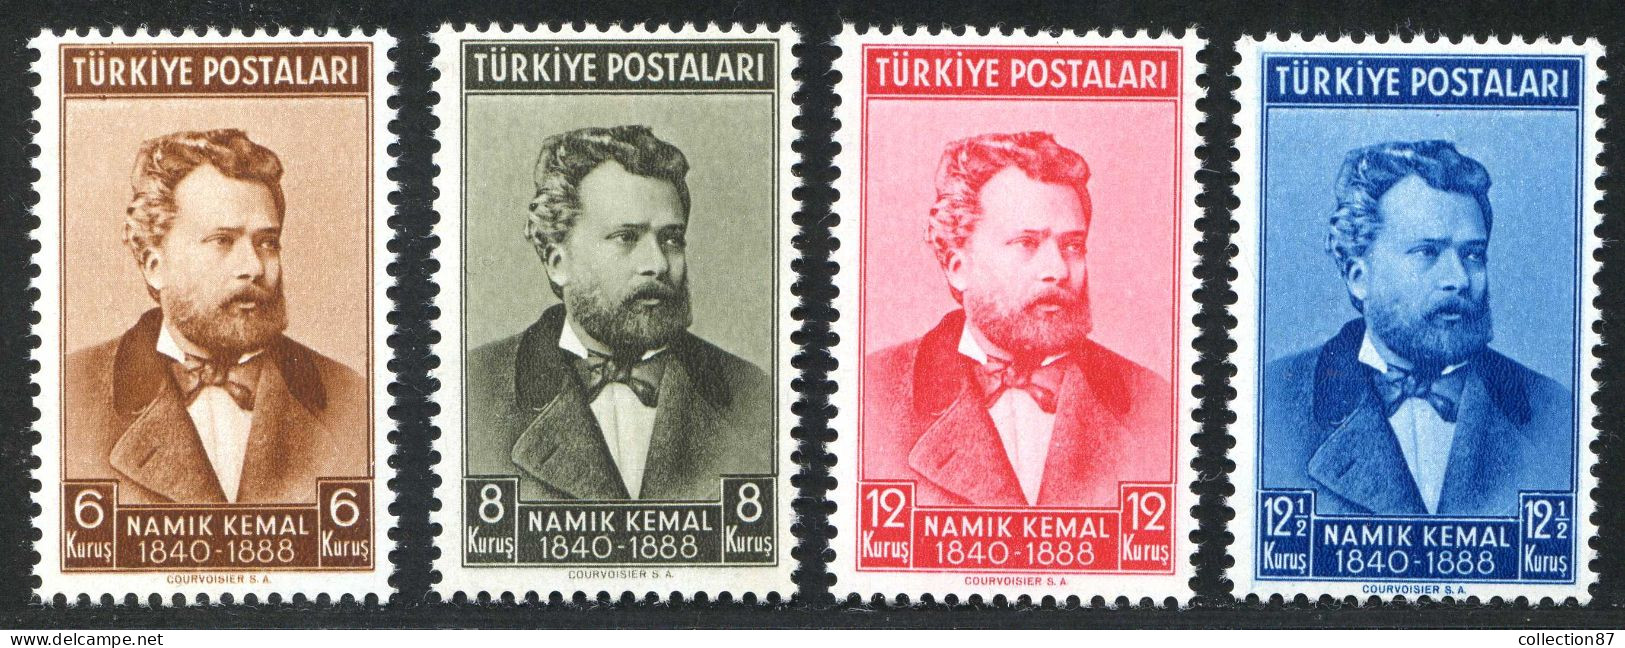 REF 091 > TURQUIE < Yv N° 930 à 933 * * < Neuf Luxe Dos Visible MNH * * Cat 18 € - Turkey > Poete Namik Kemal - Unused Stamps